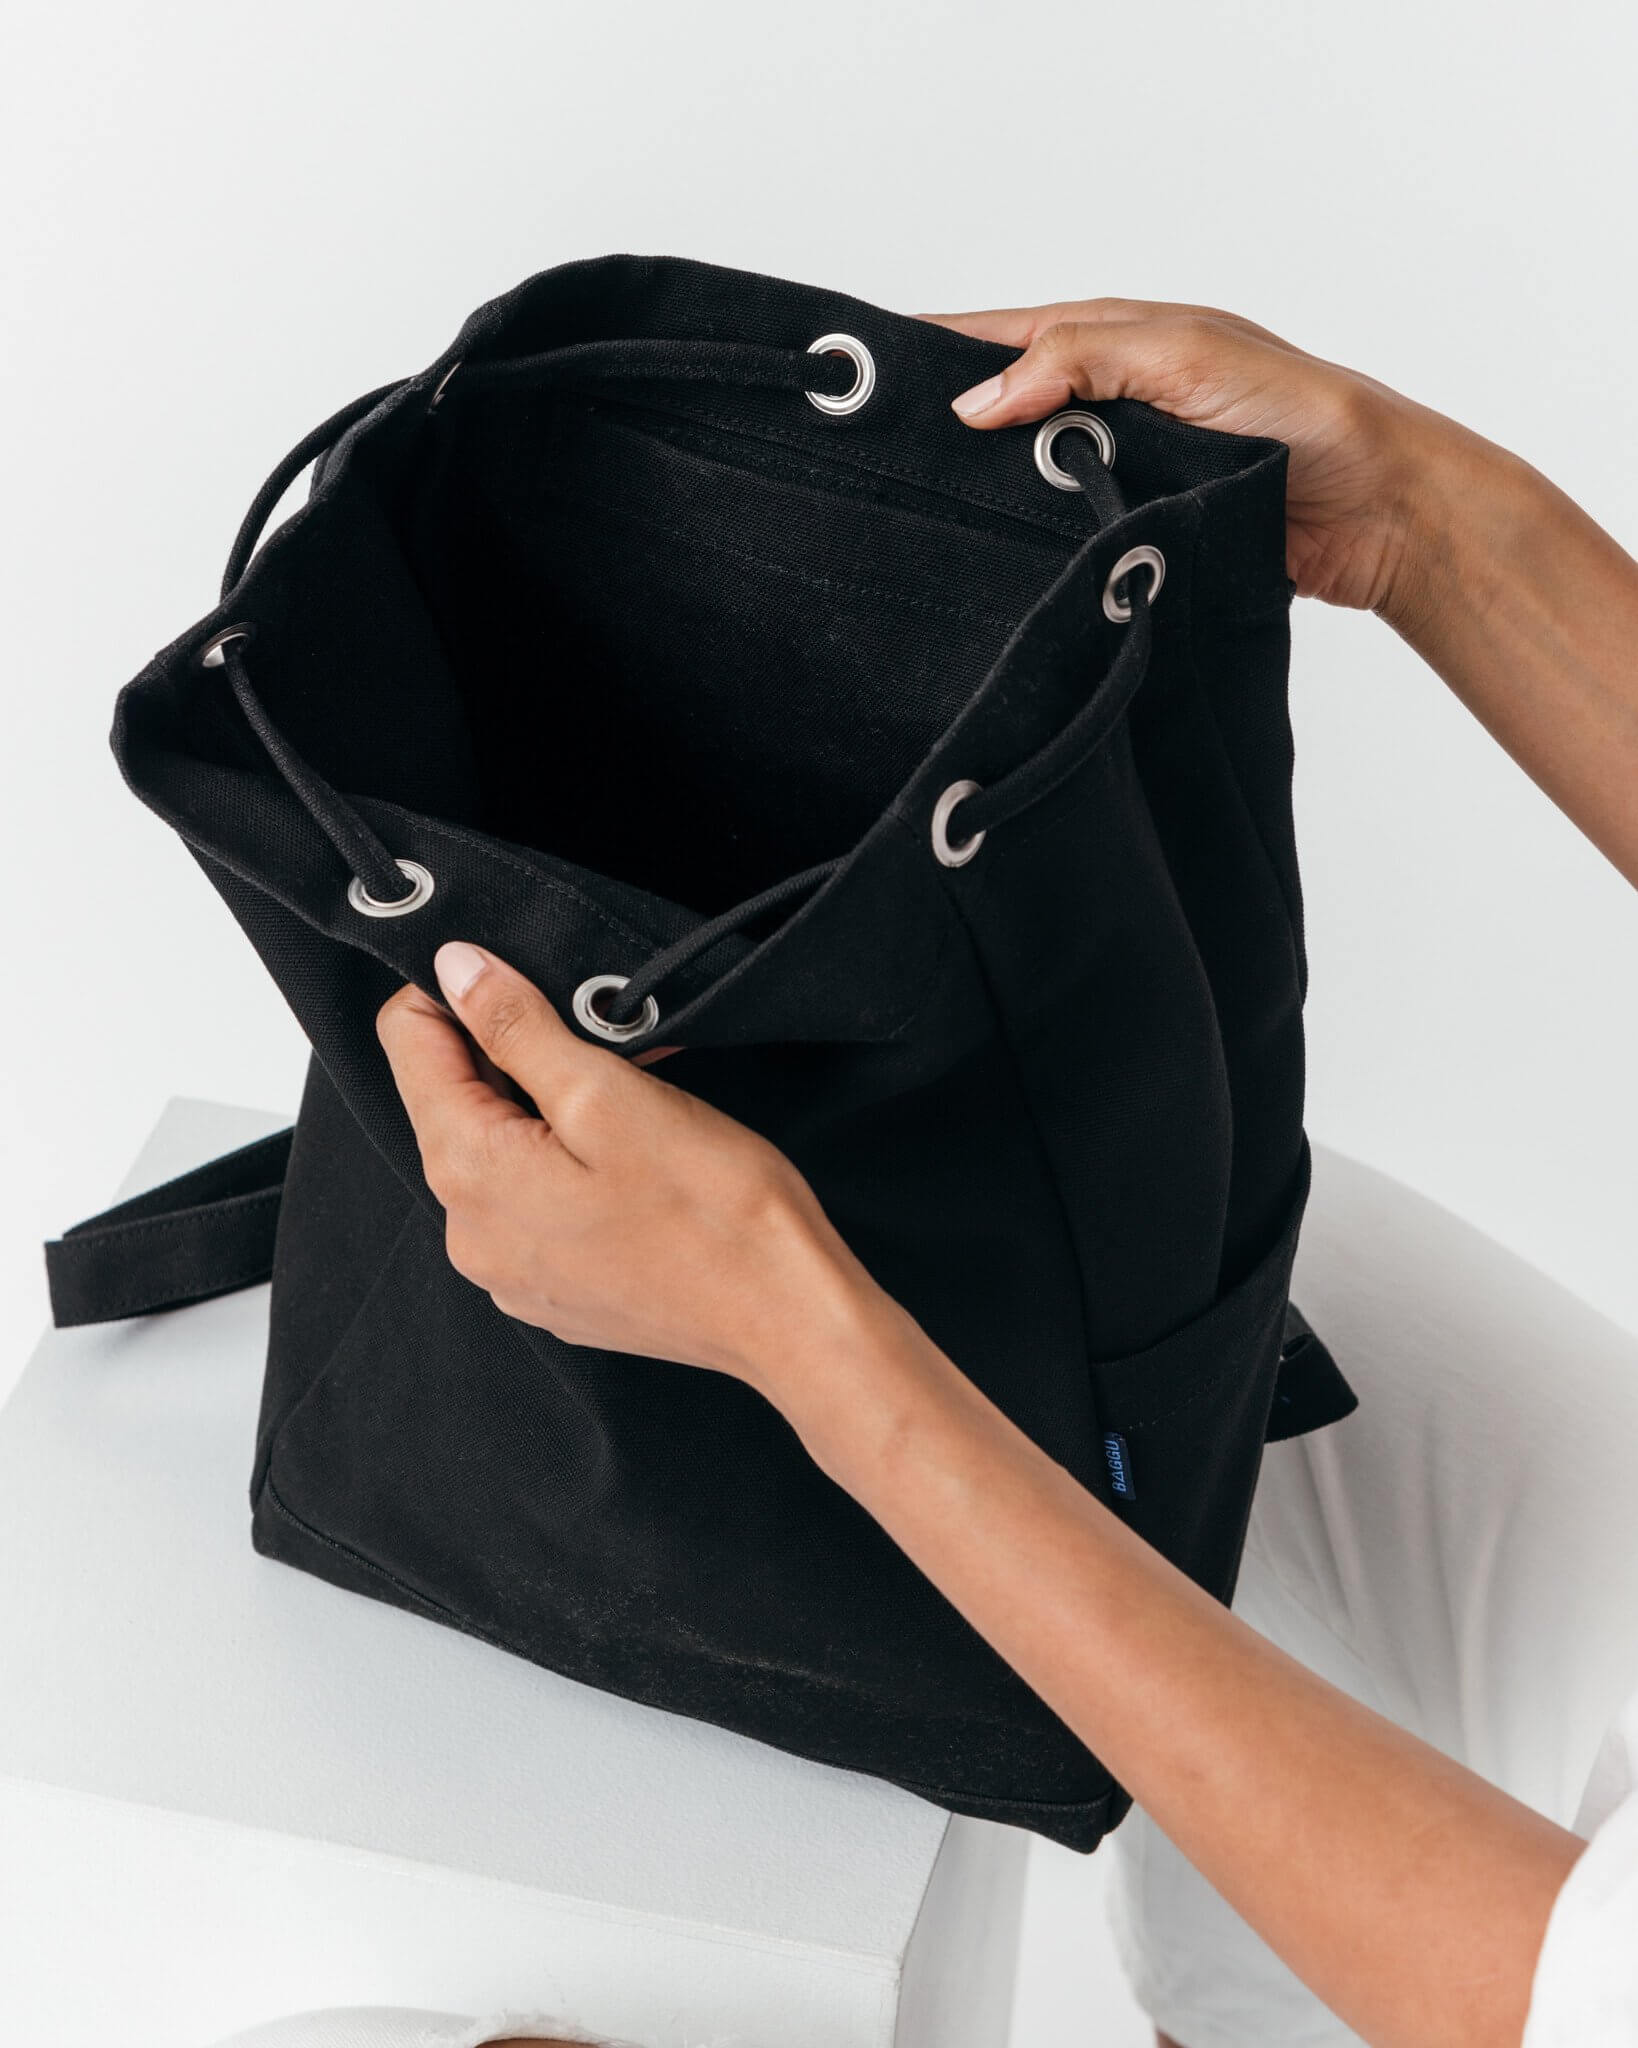 Buy Baggu Drawstring Backpack in Black at Well.ca | Free Shipping $35 ...